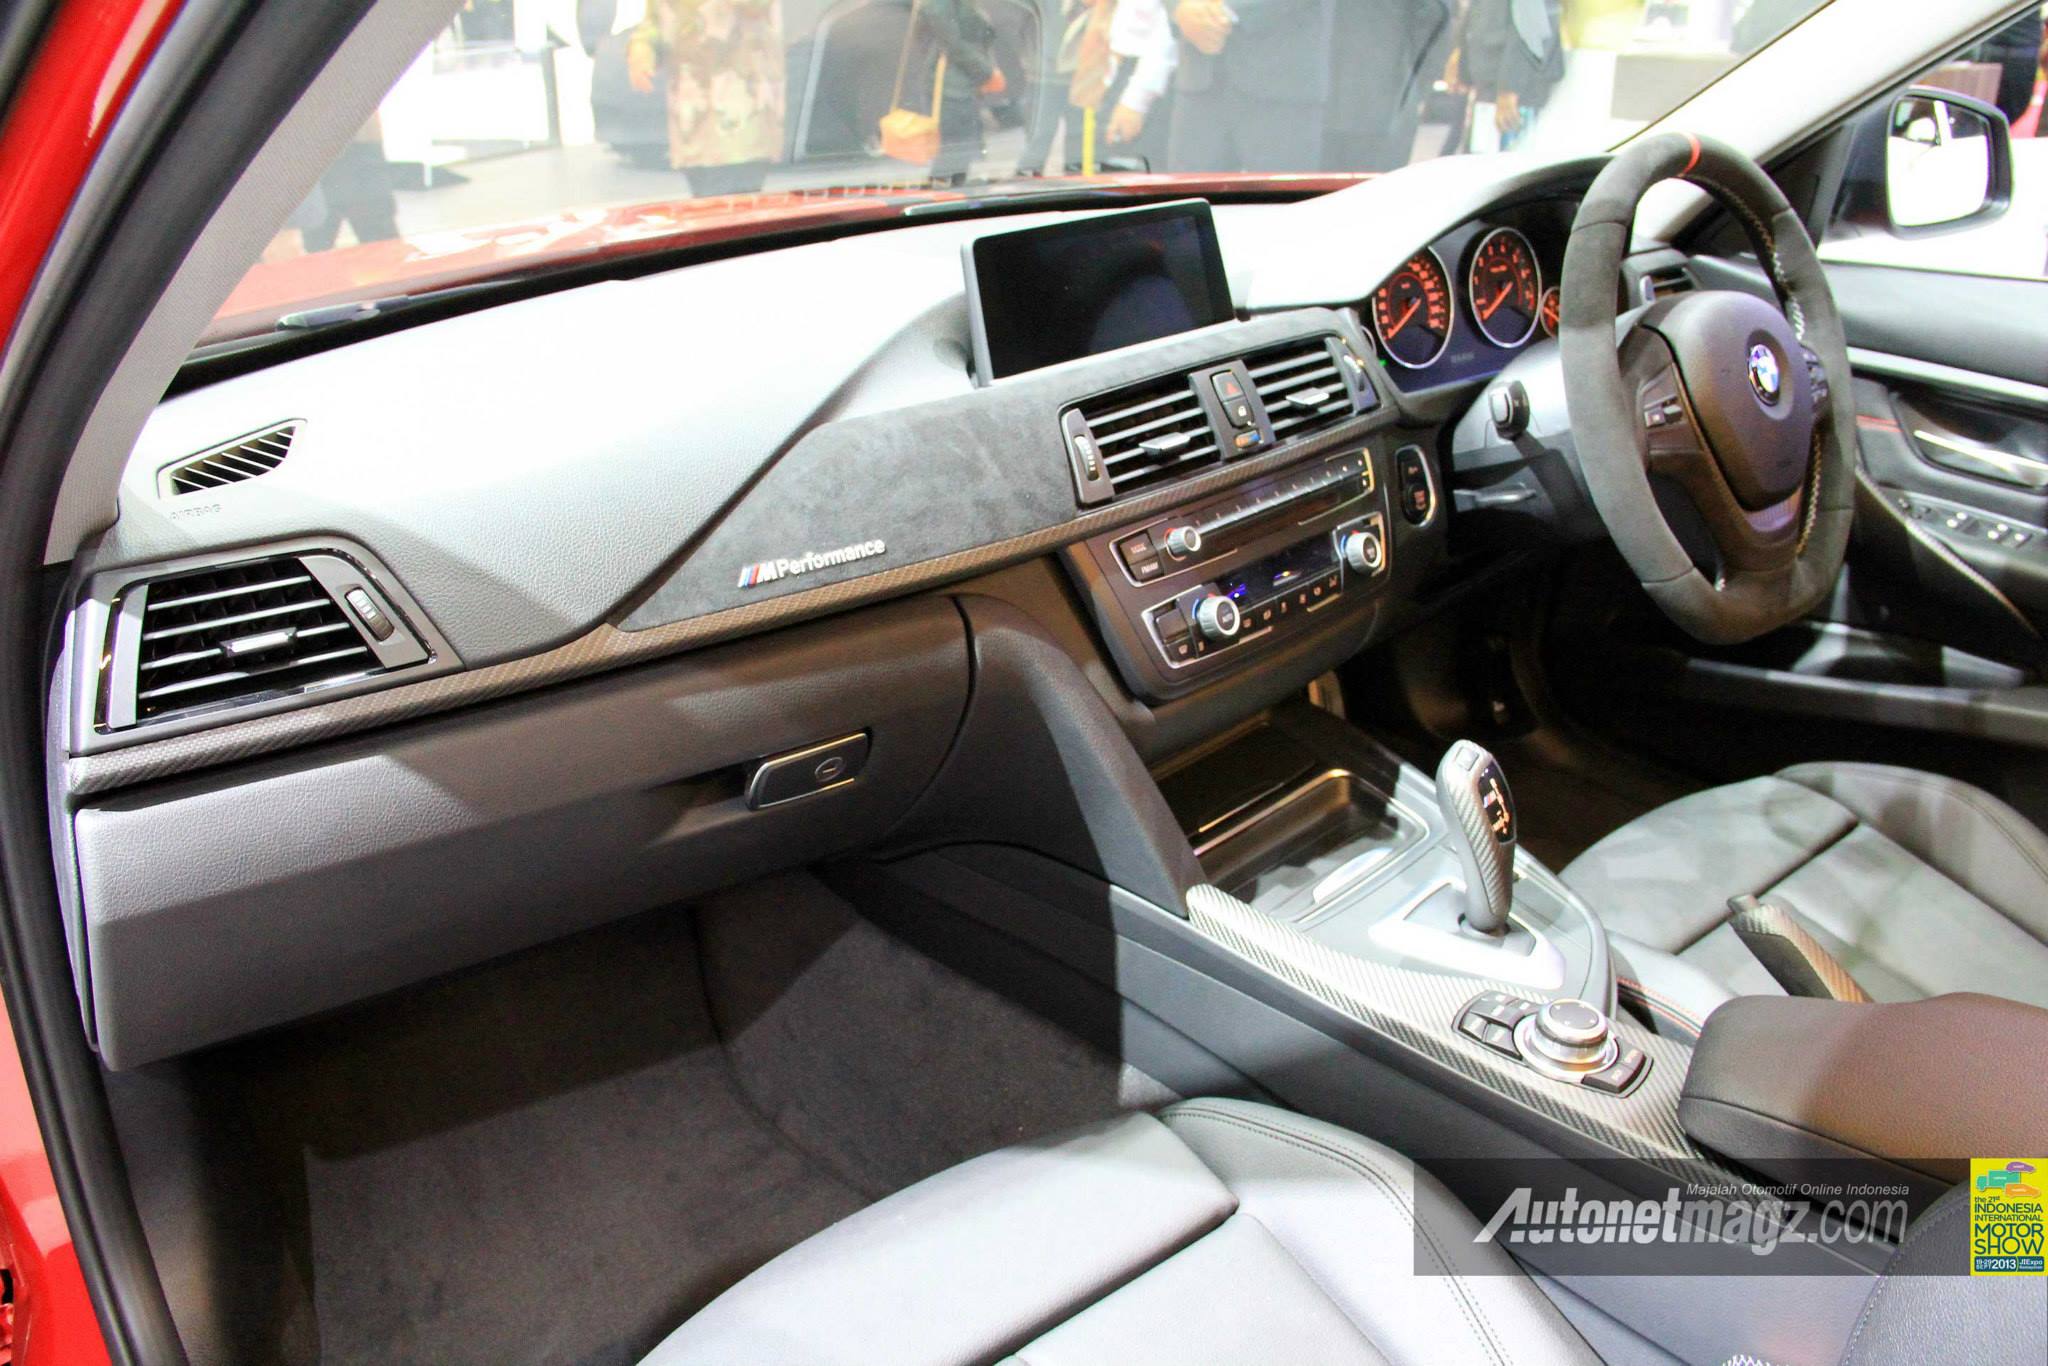 Interior BMW 320i Sport Indonesia AutonetMagz Review Mobil Dan